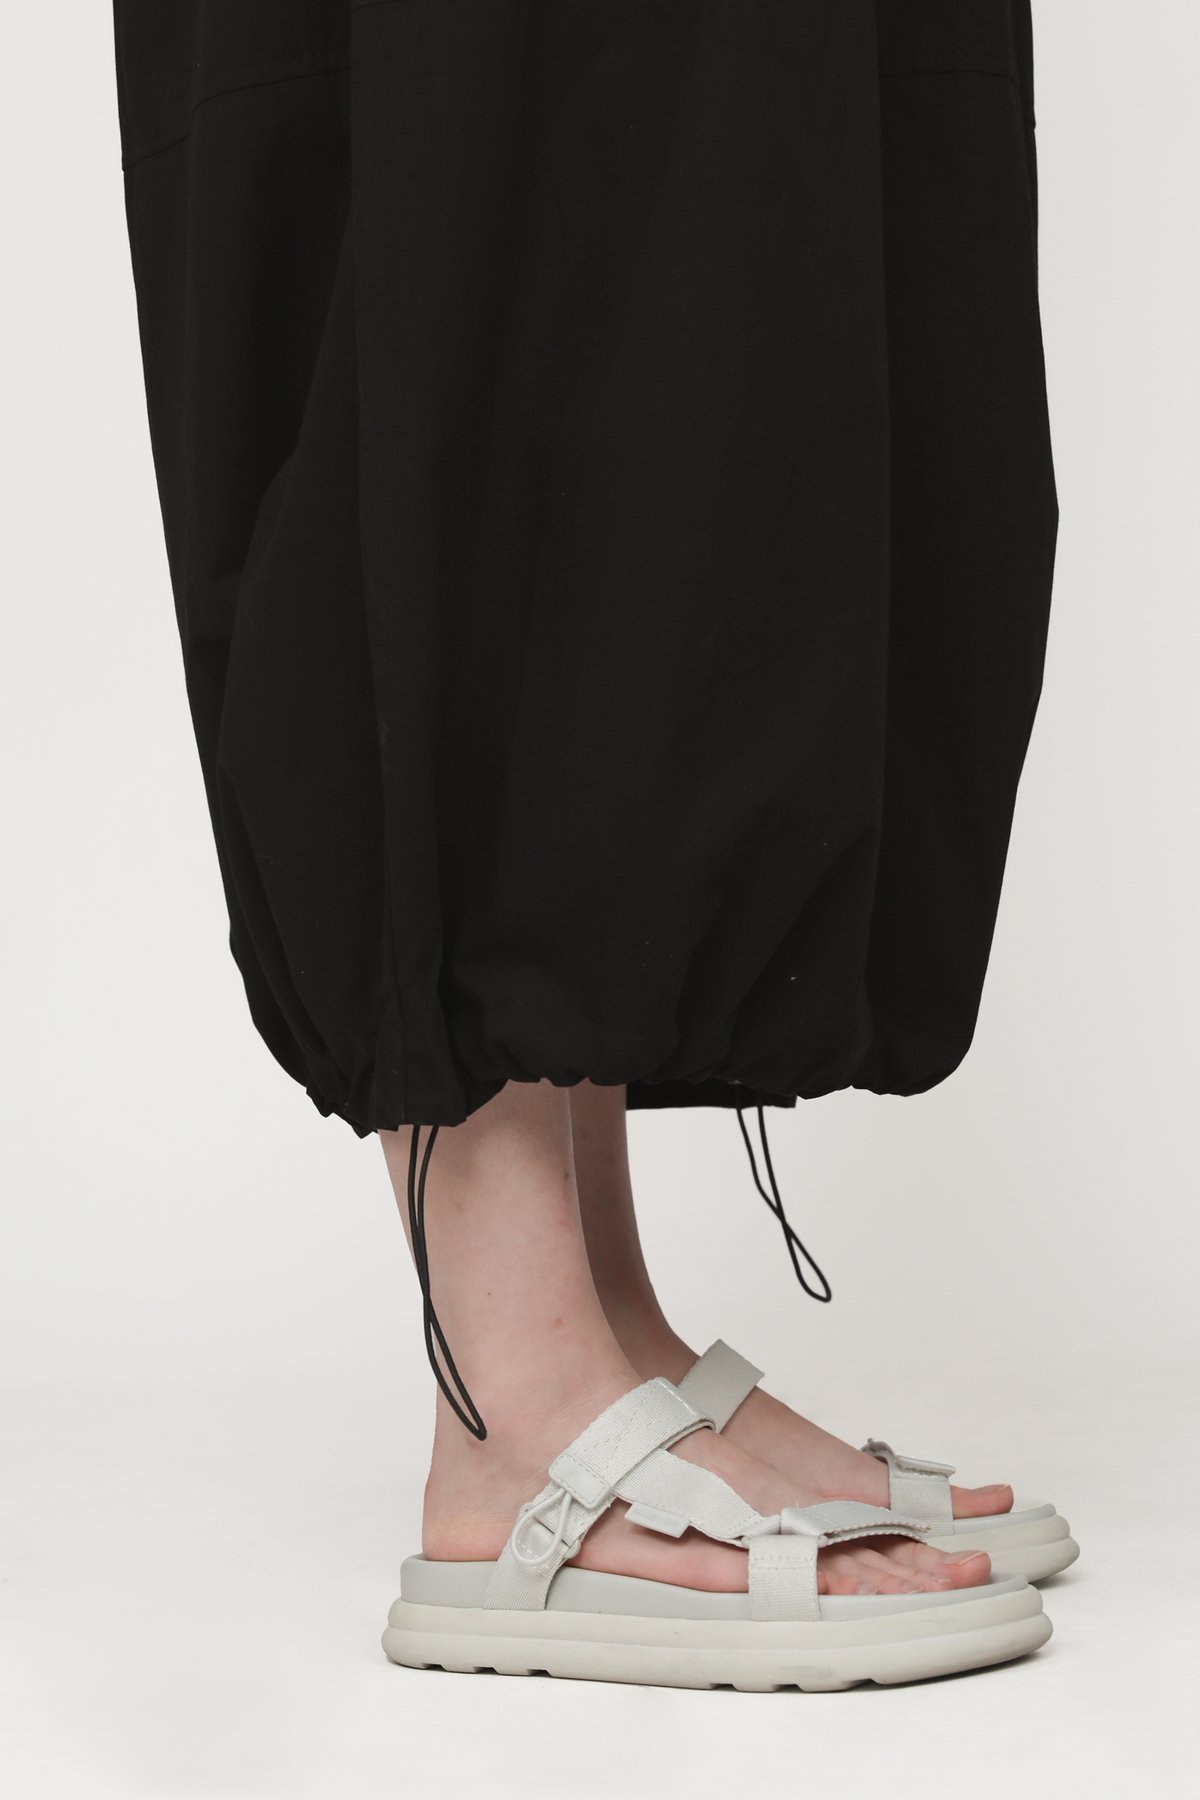 Anthea Parachute Maxi Dress (Black)